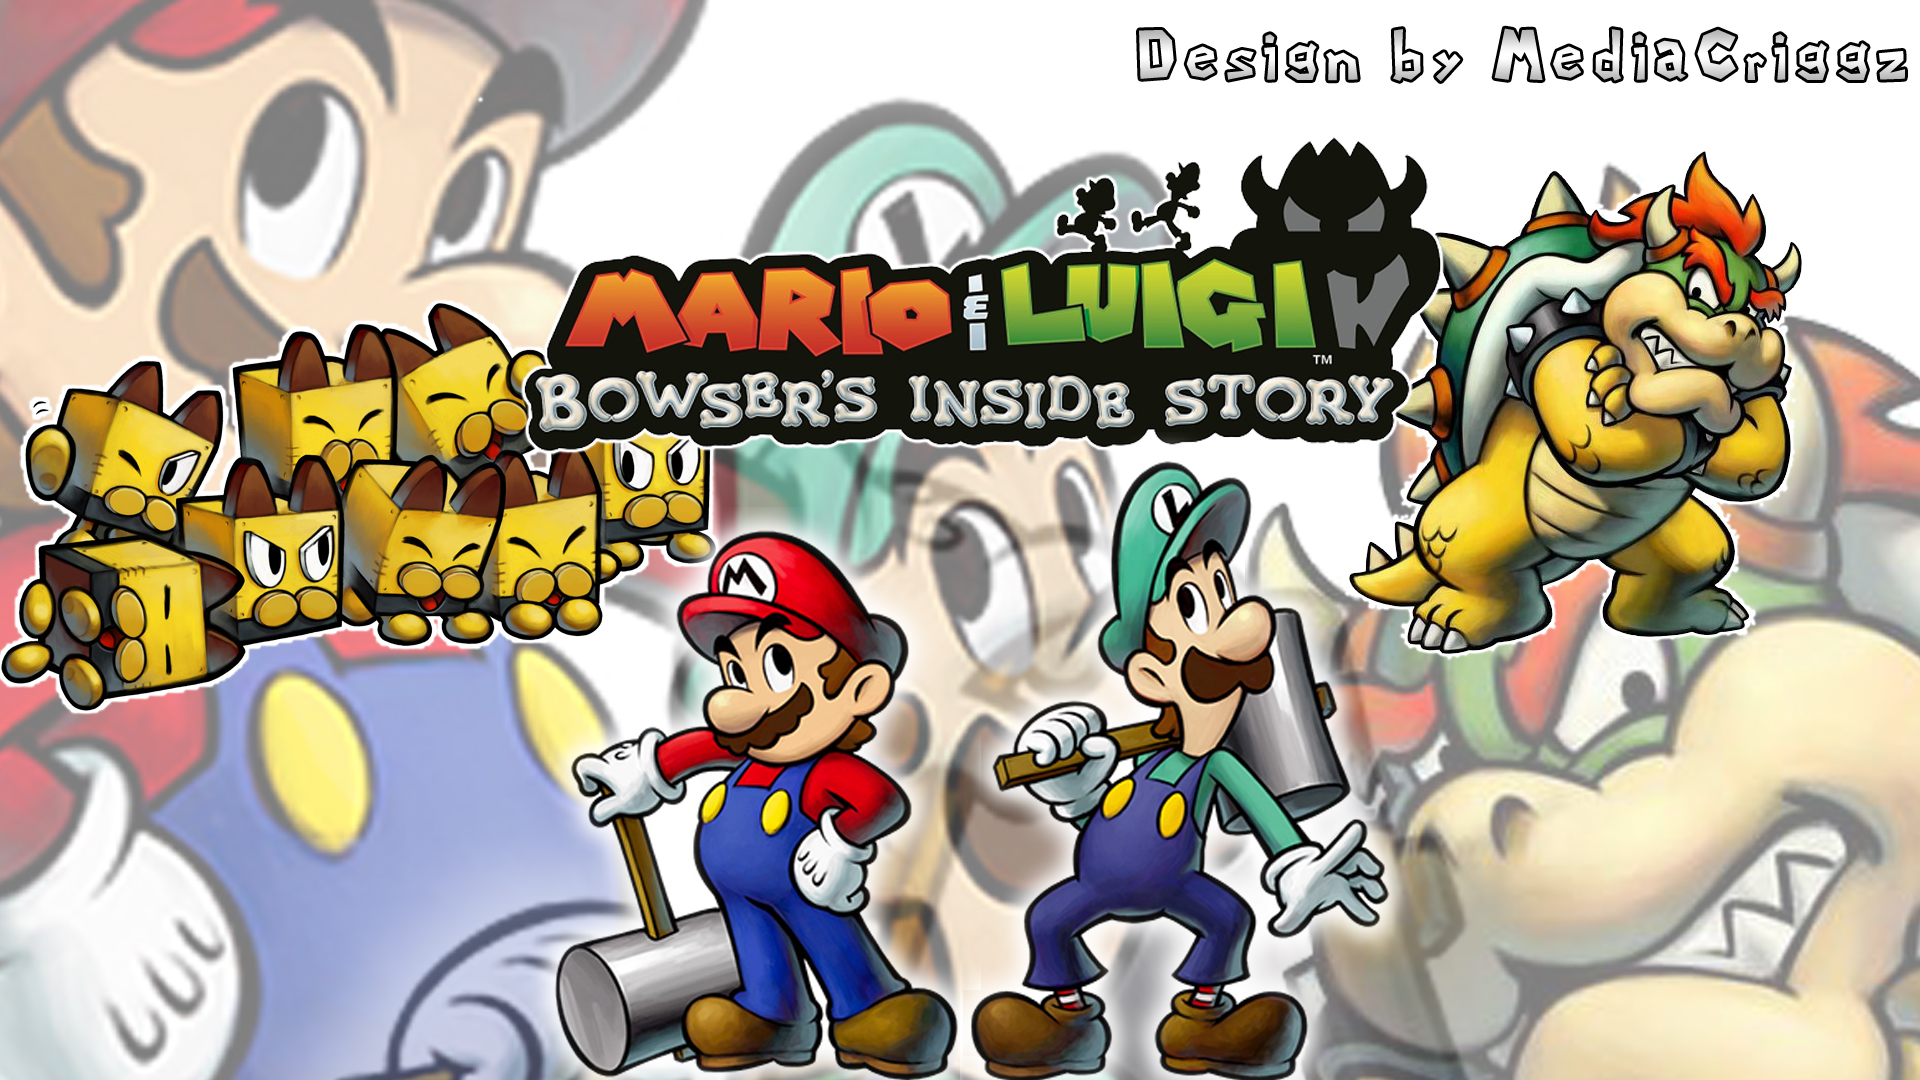 Mario luigi bowser. Mario and Luigi Bowser's inside story. Марио и Луиджи Боузер инсайд стори. Марио Bowser inside story.